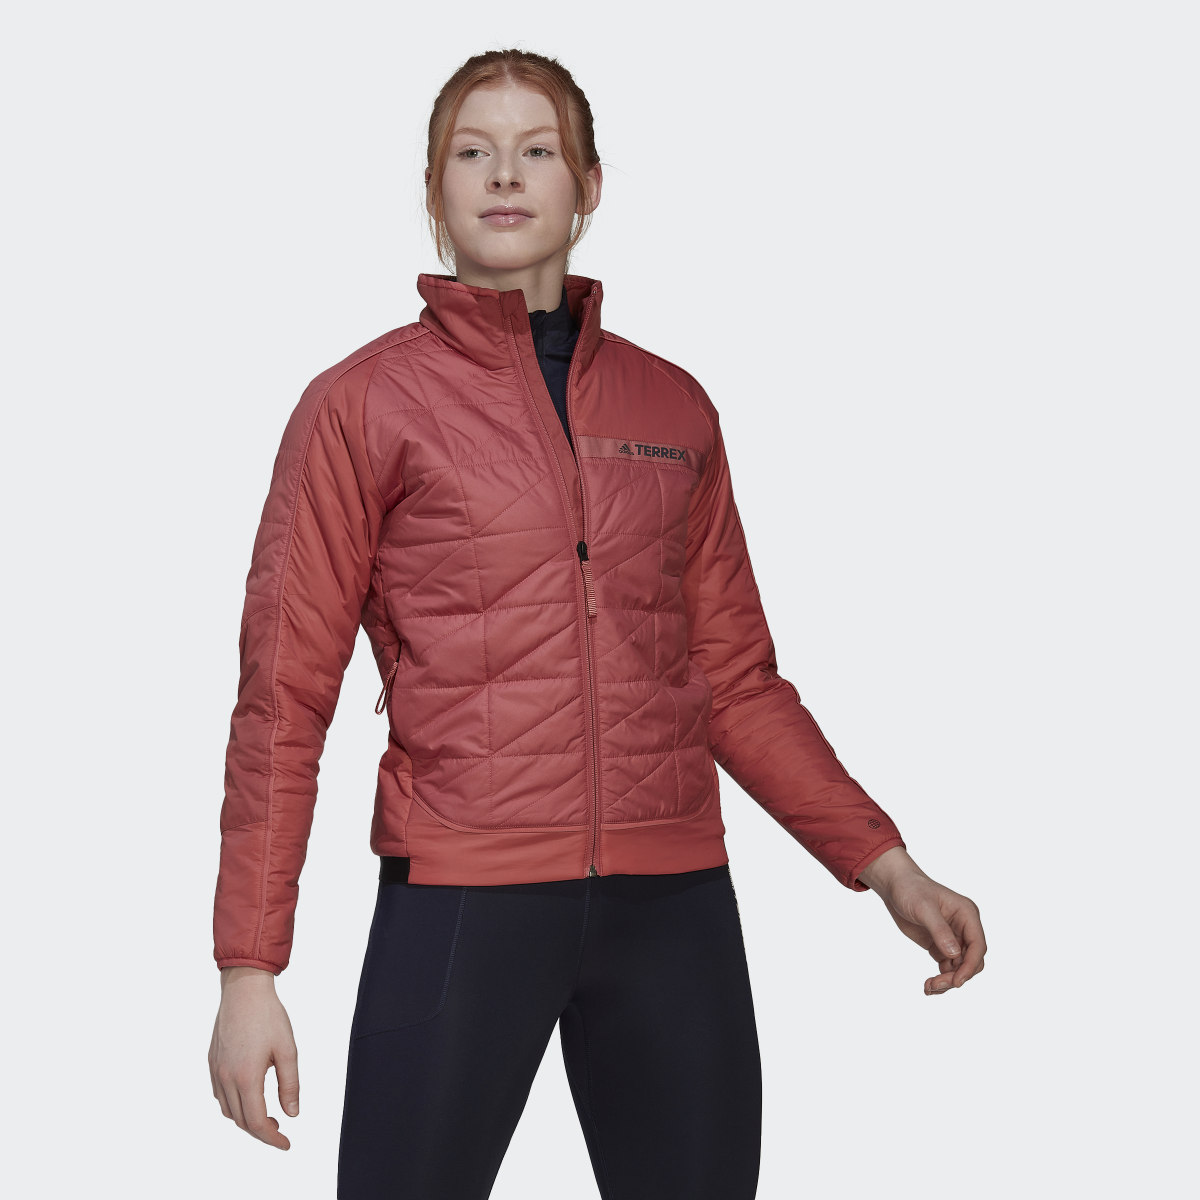 Adidas Terrex Multi Synthetic Insulated Jacket. 5